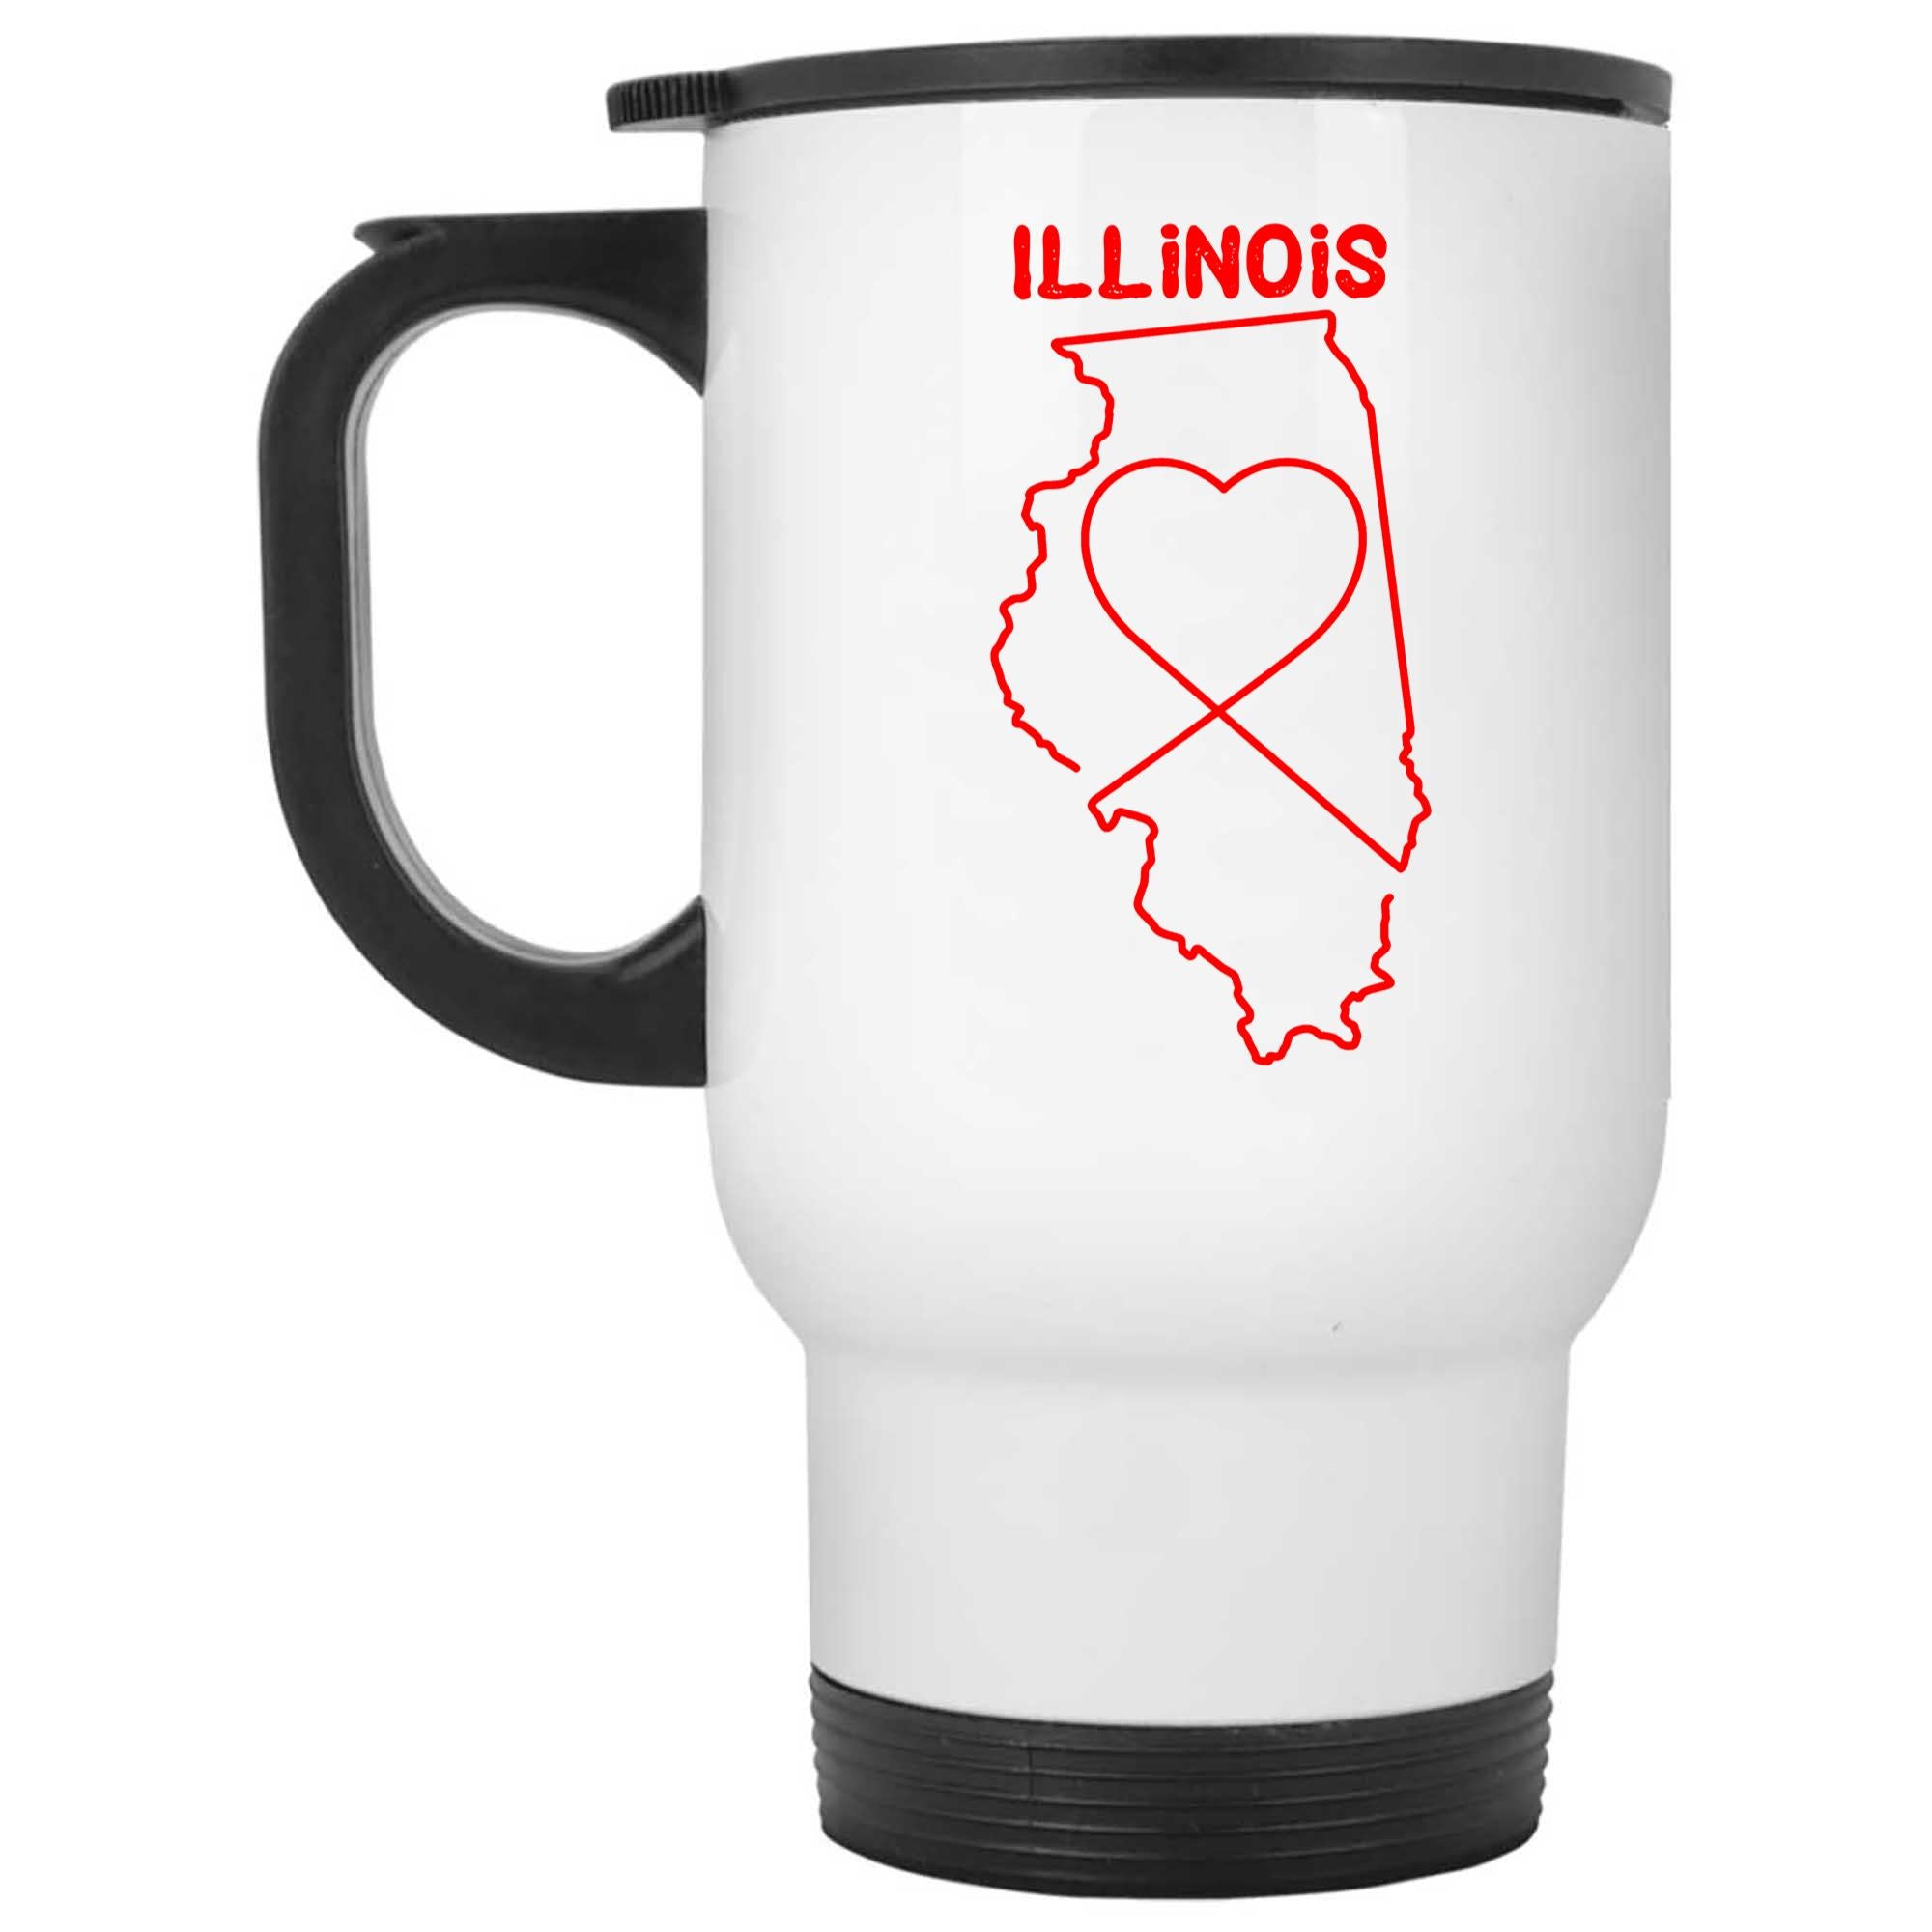 Skitongifts Coffee Mug Funny Ceramic Novelty Illinois - Heart Il State Outline Map 2hNIY9q